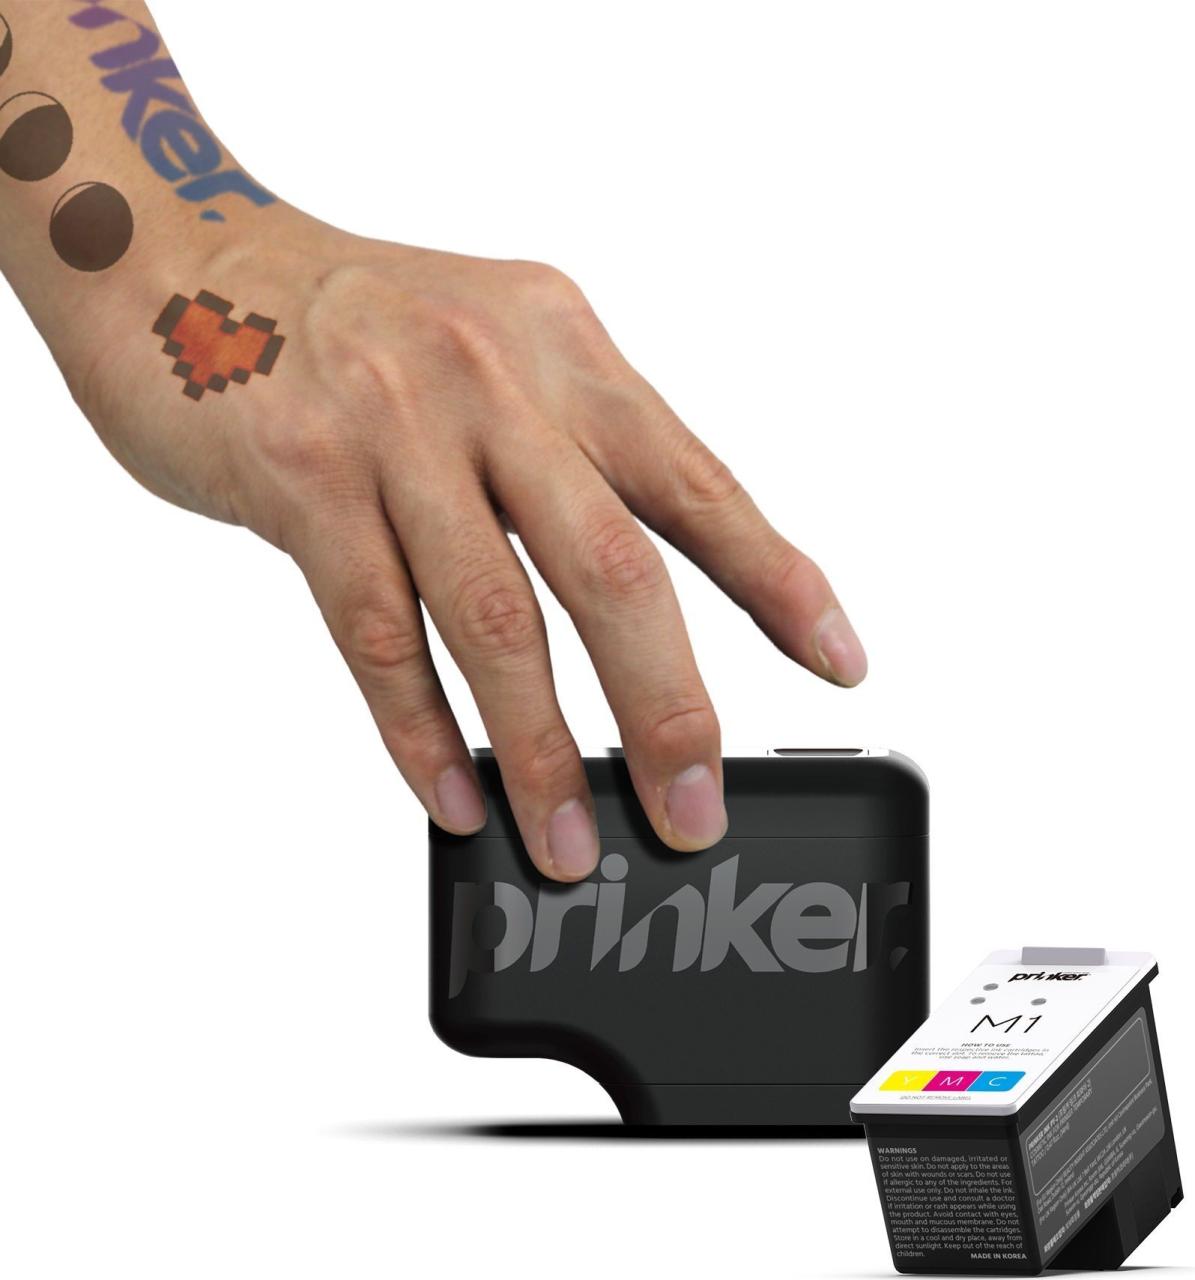 Tattoodrucker Prinker M Color Set - Skin Printer